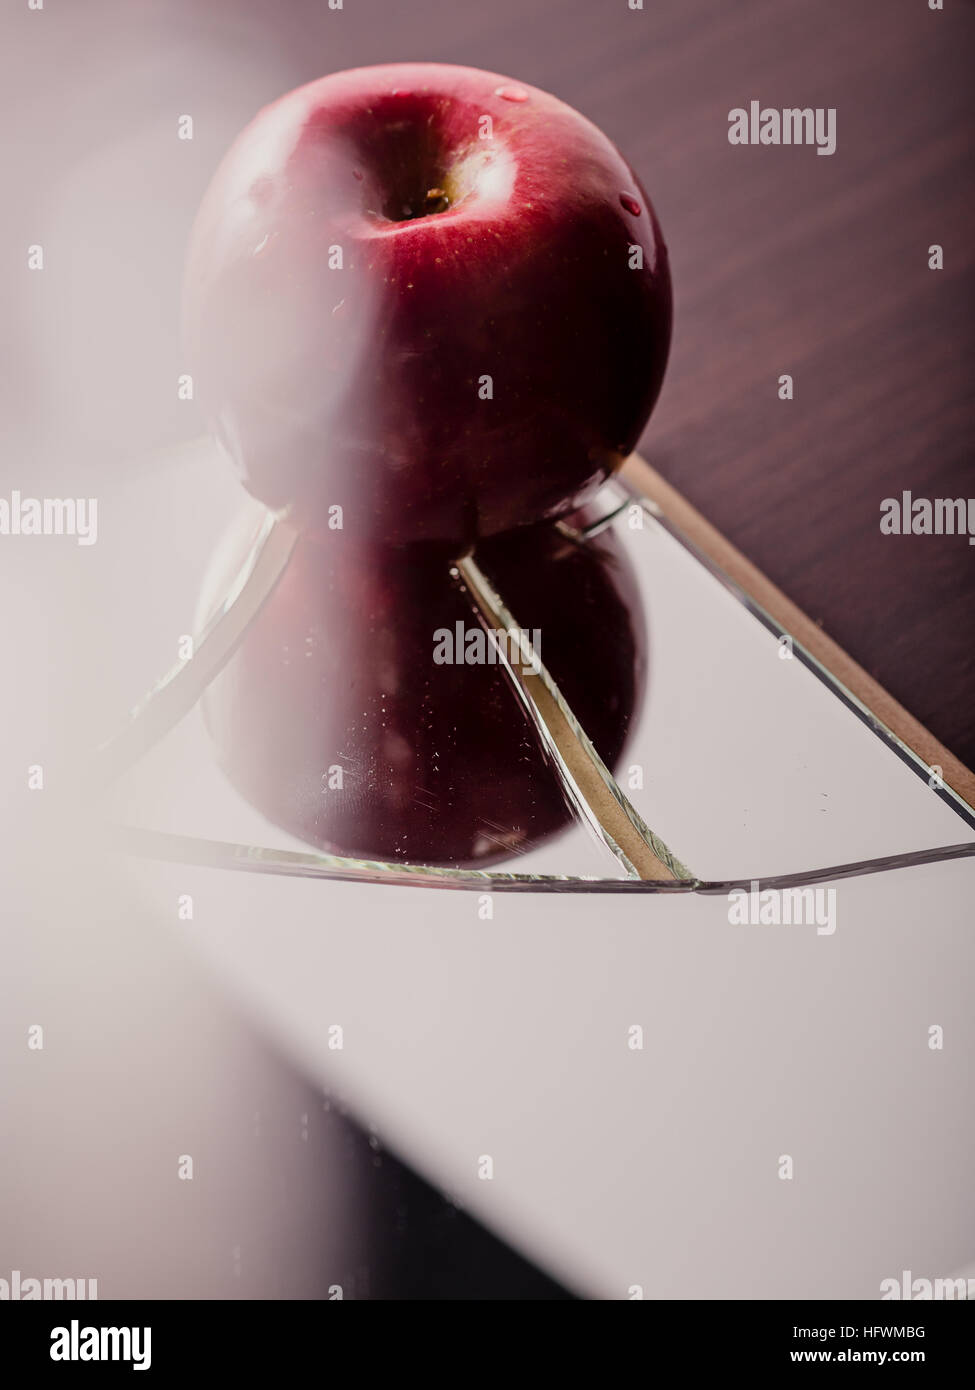 Red apple on cracked broken mirror reflecting Stock Photo